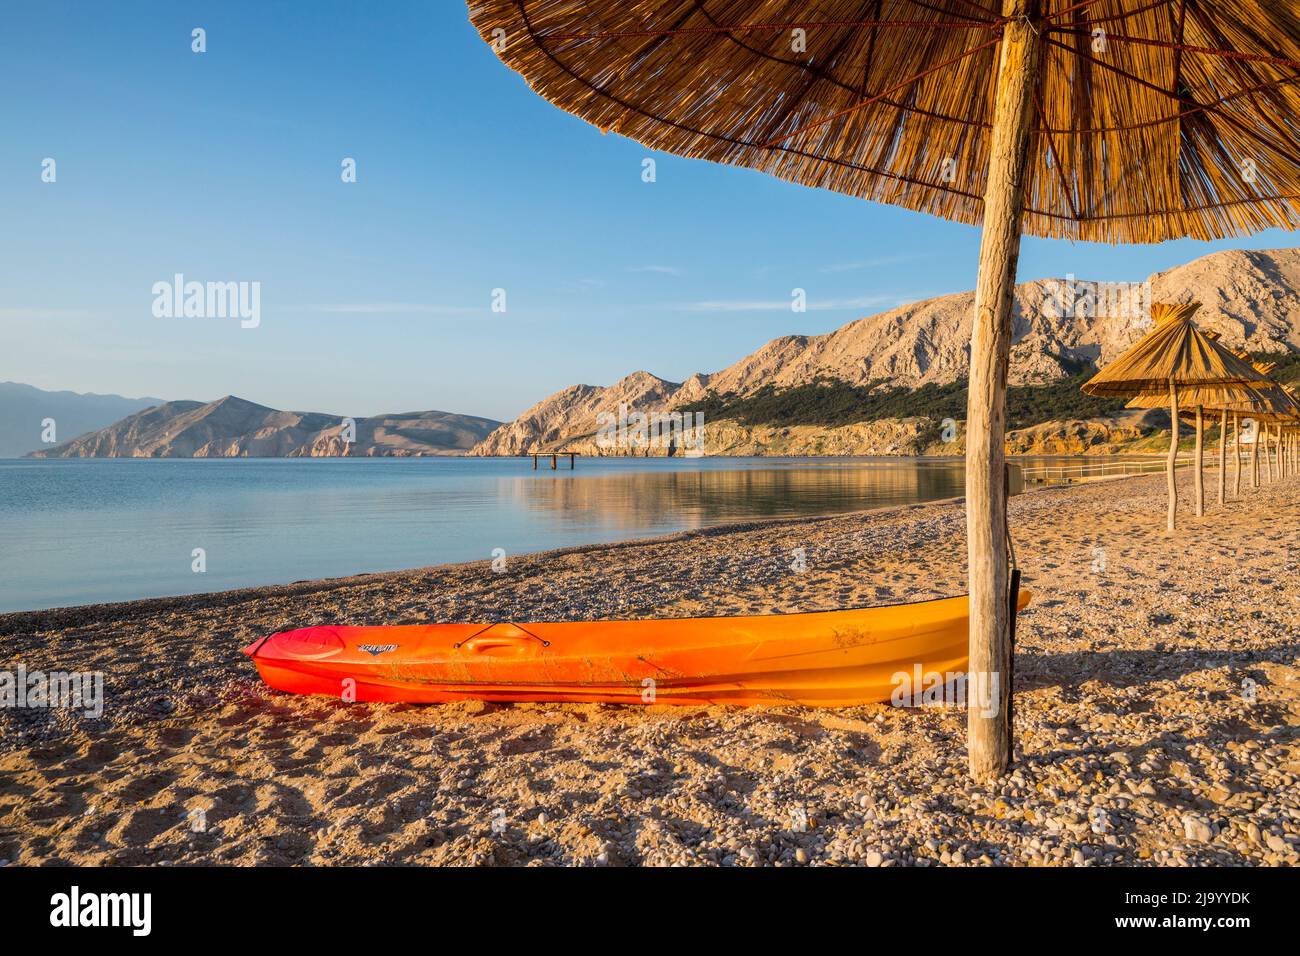 Kayak en la playa de arena Foto de stock